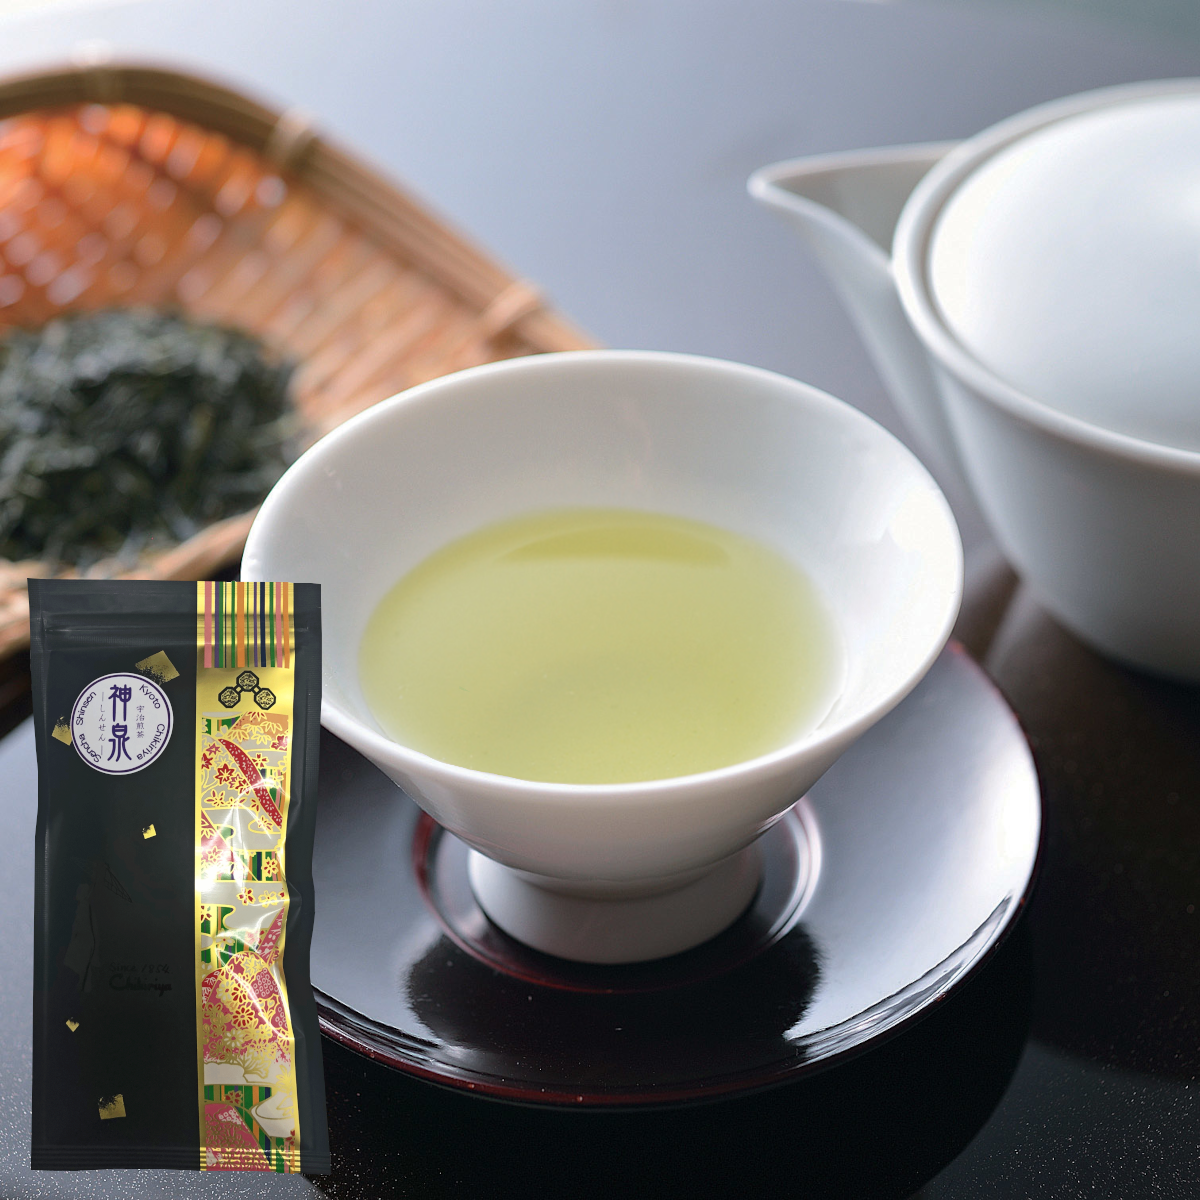 Uji Sencha "Shinsen" (Japanese green tea from Kyoto) - 100g tea leaves